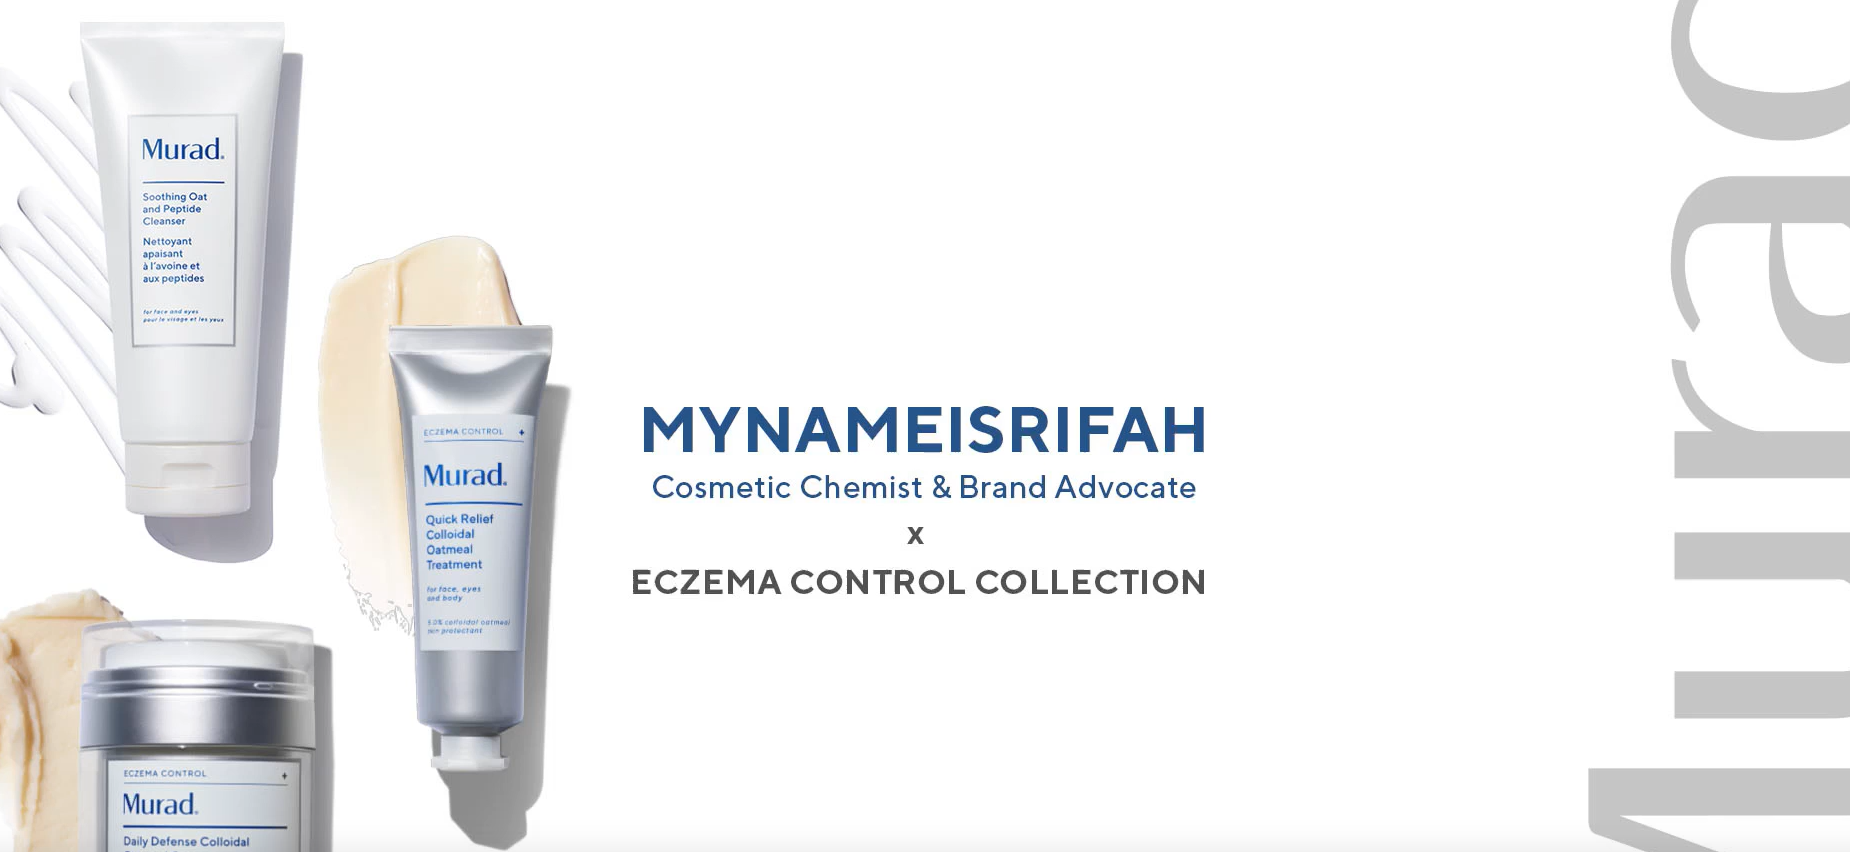 MYNAMEISRIFIFAH x Eczema Control Collection video thumbnail